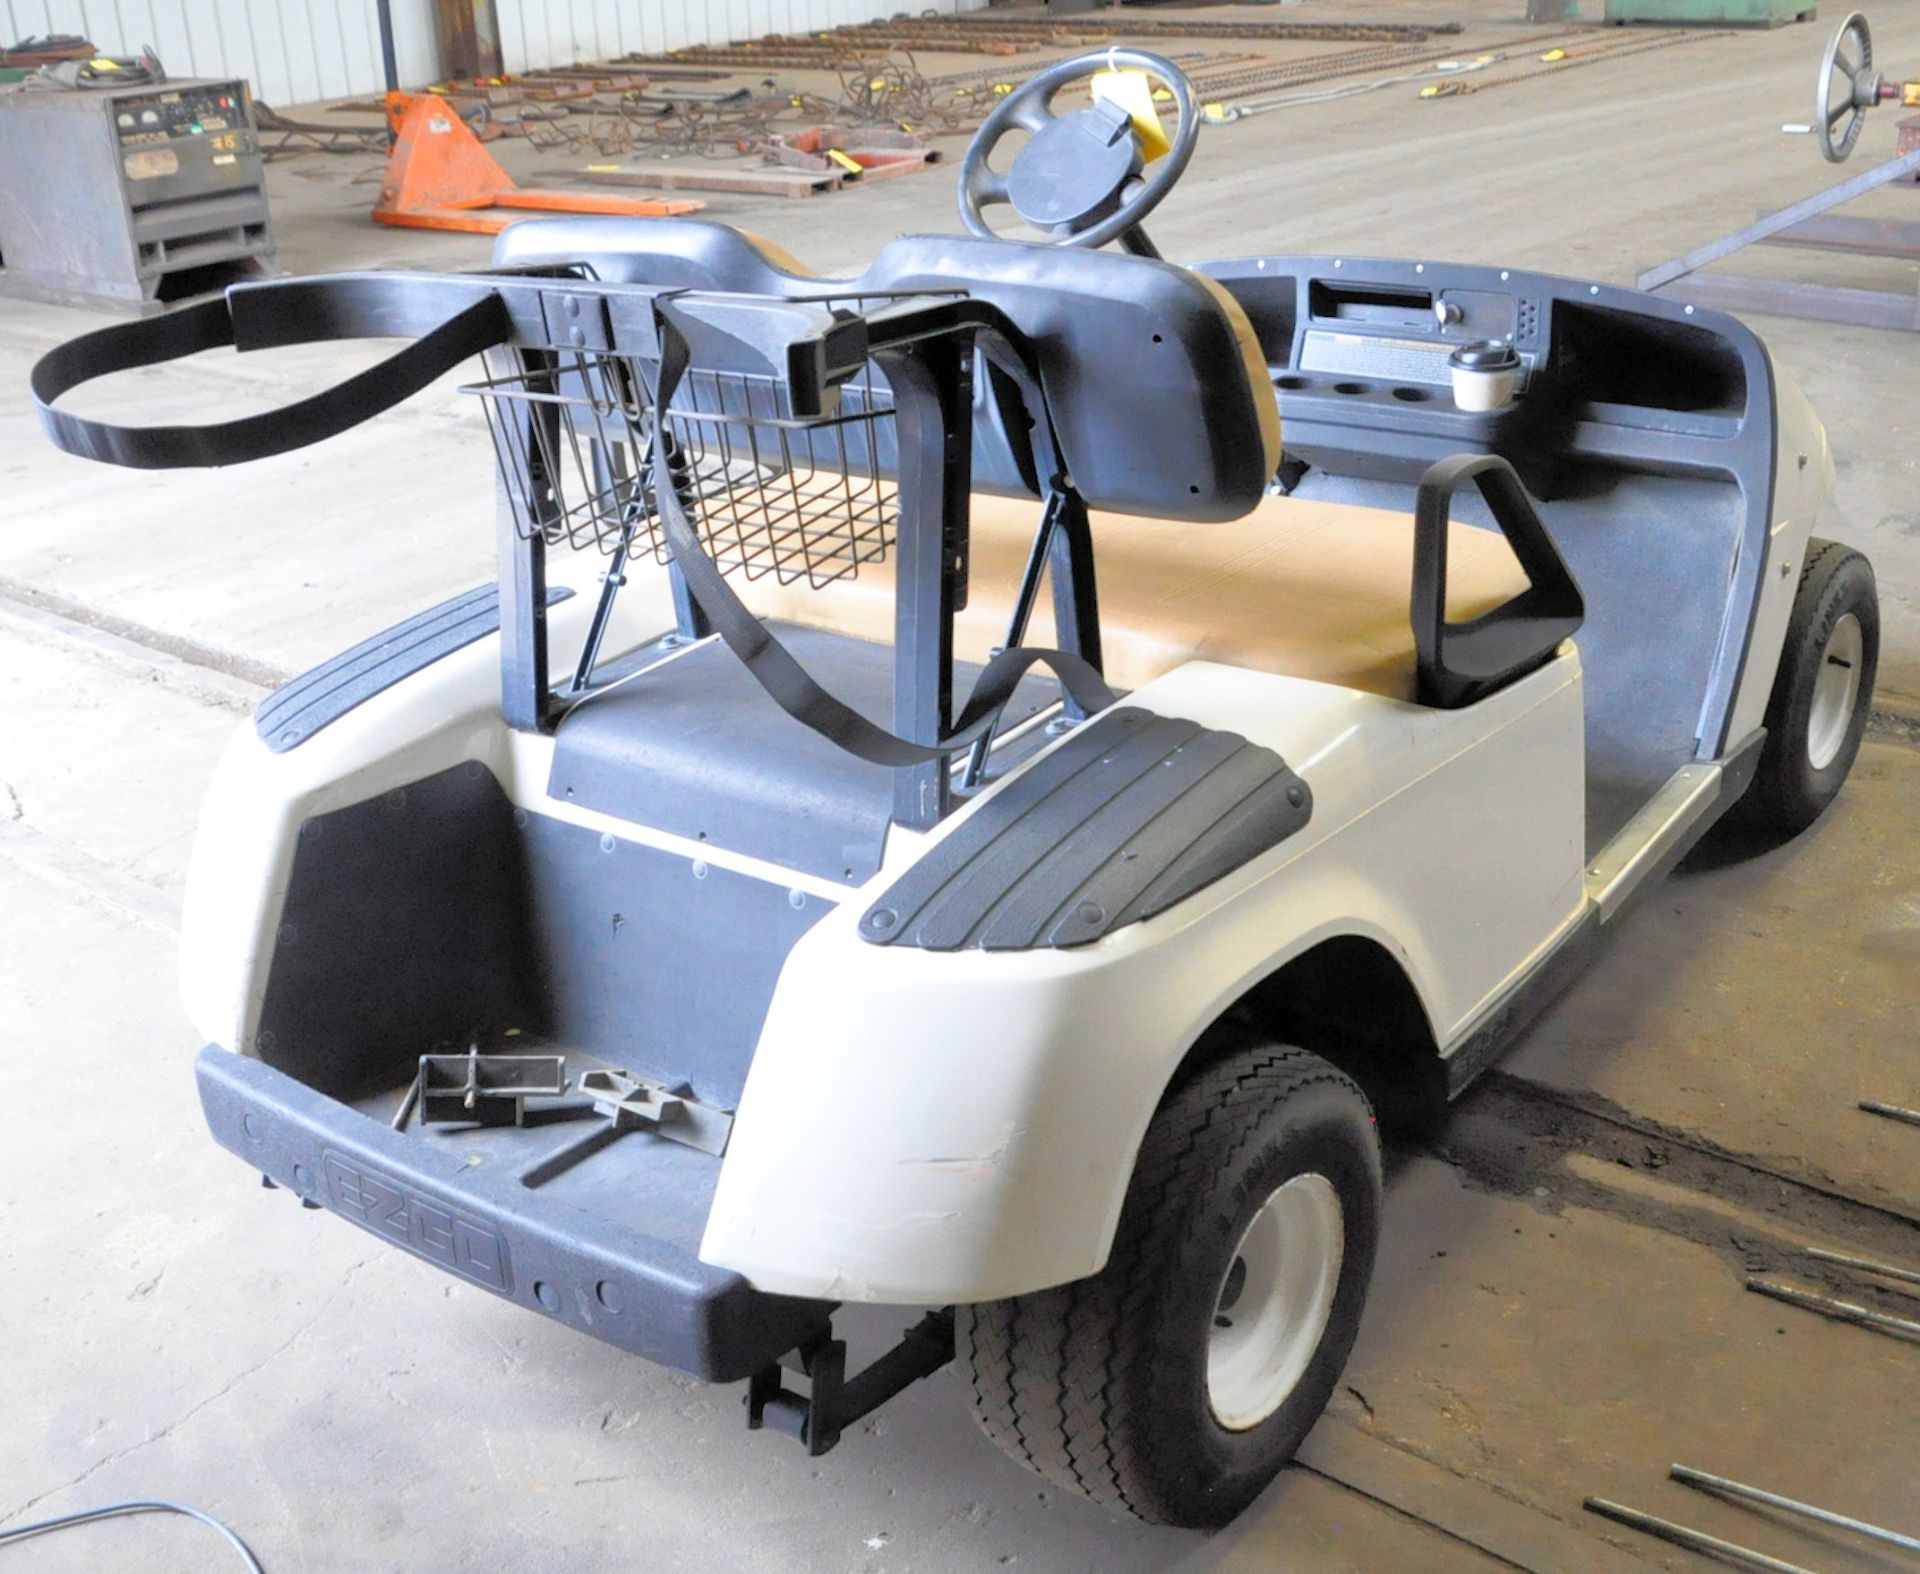 E-Z Go Model J100, 2-Passenger Electric Golf Cart, S/n 1300785, (Needs Batteries) - Image 2 of 3